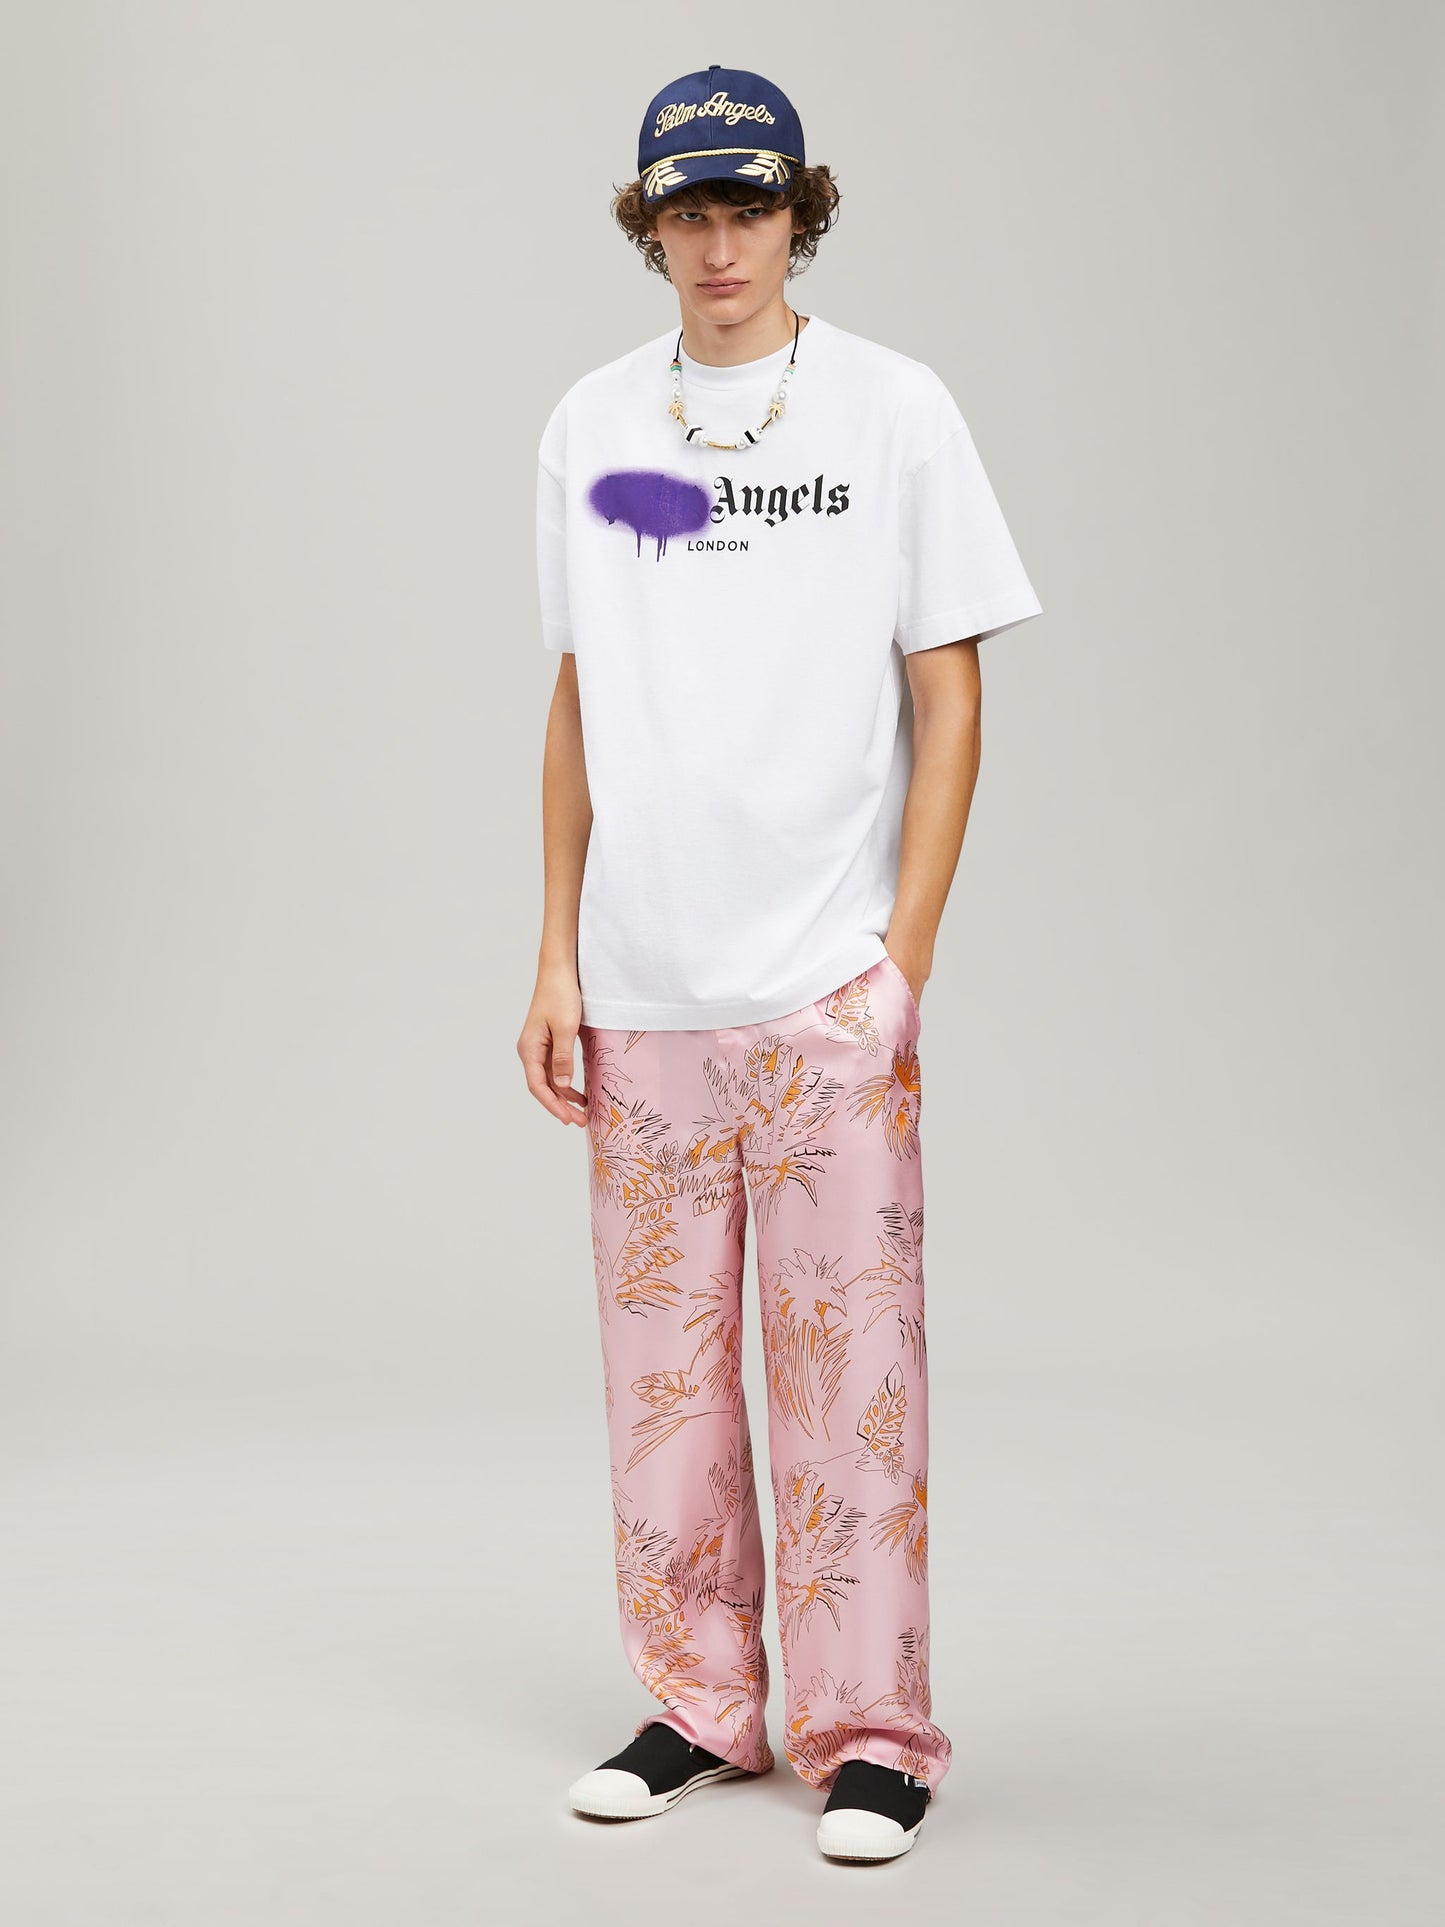 Palm Angels London Sprayed T-Shirt White/Purple